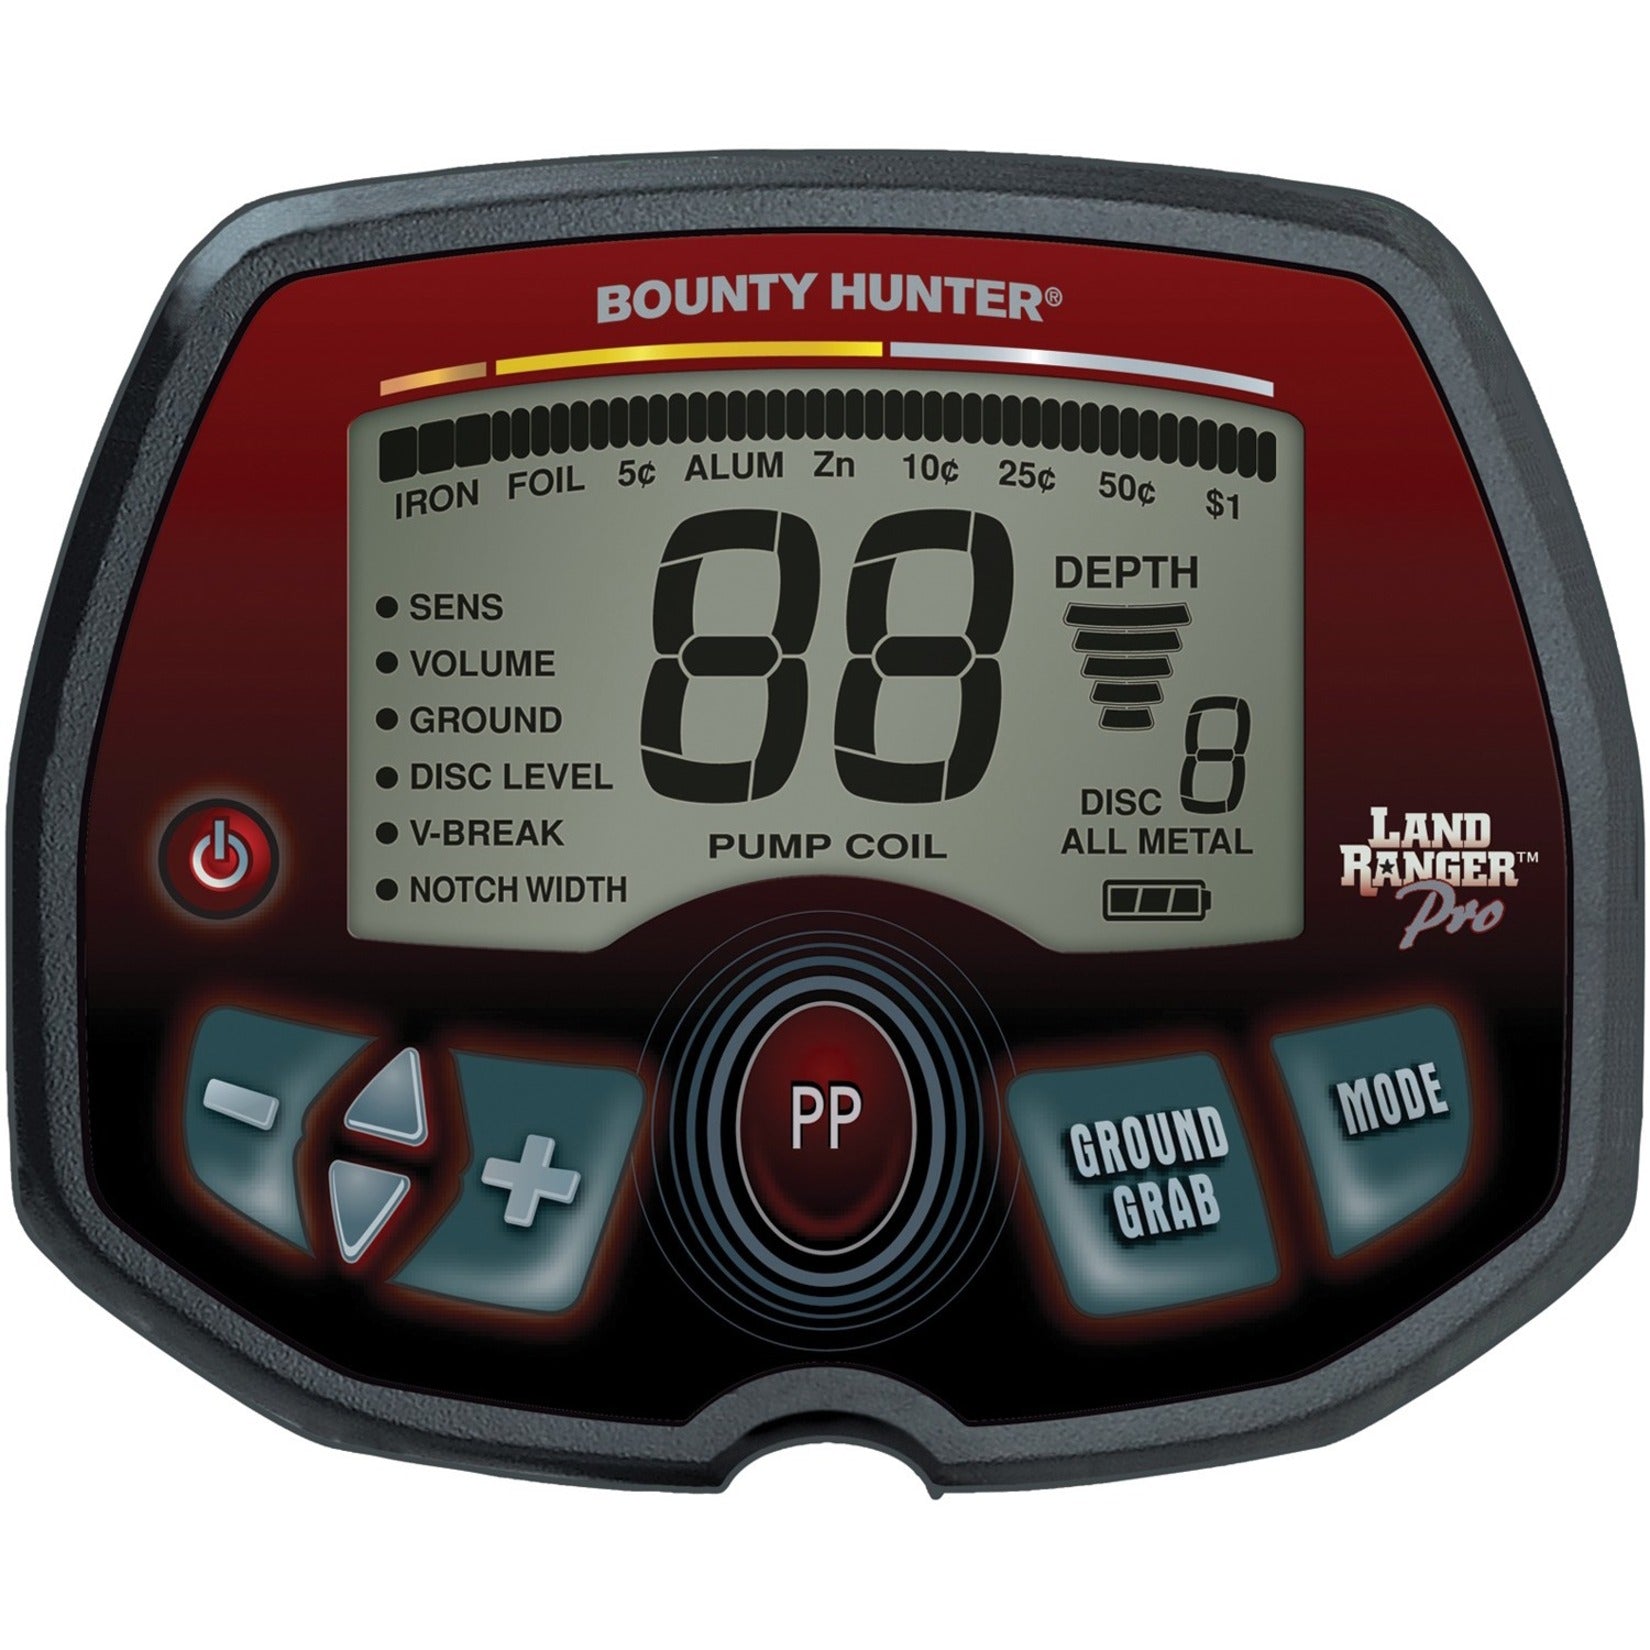 Bounty Hunter PROLR Land Ranger PRO Metal Detector, 5 Year Warranty, Battery Powered